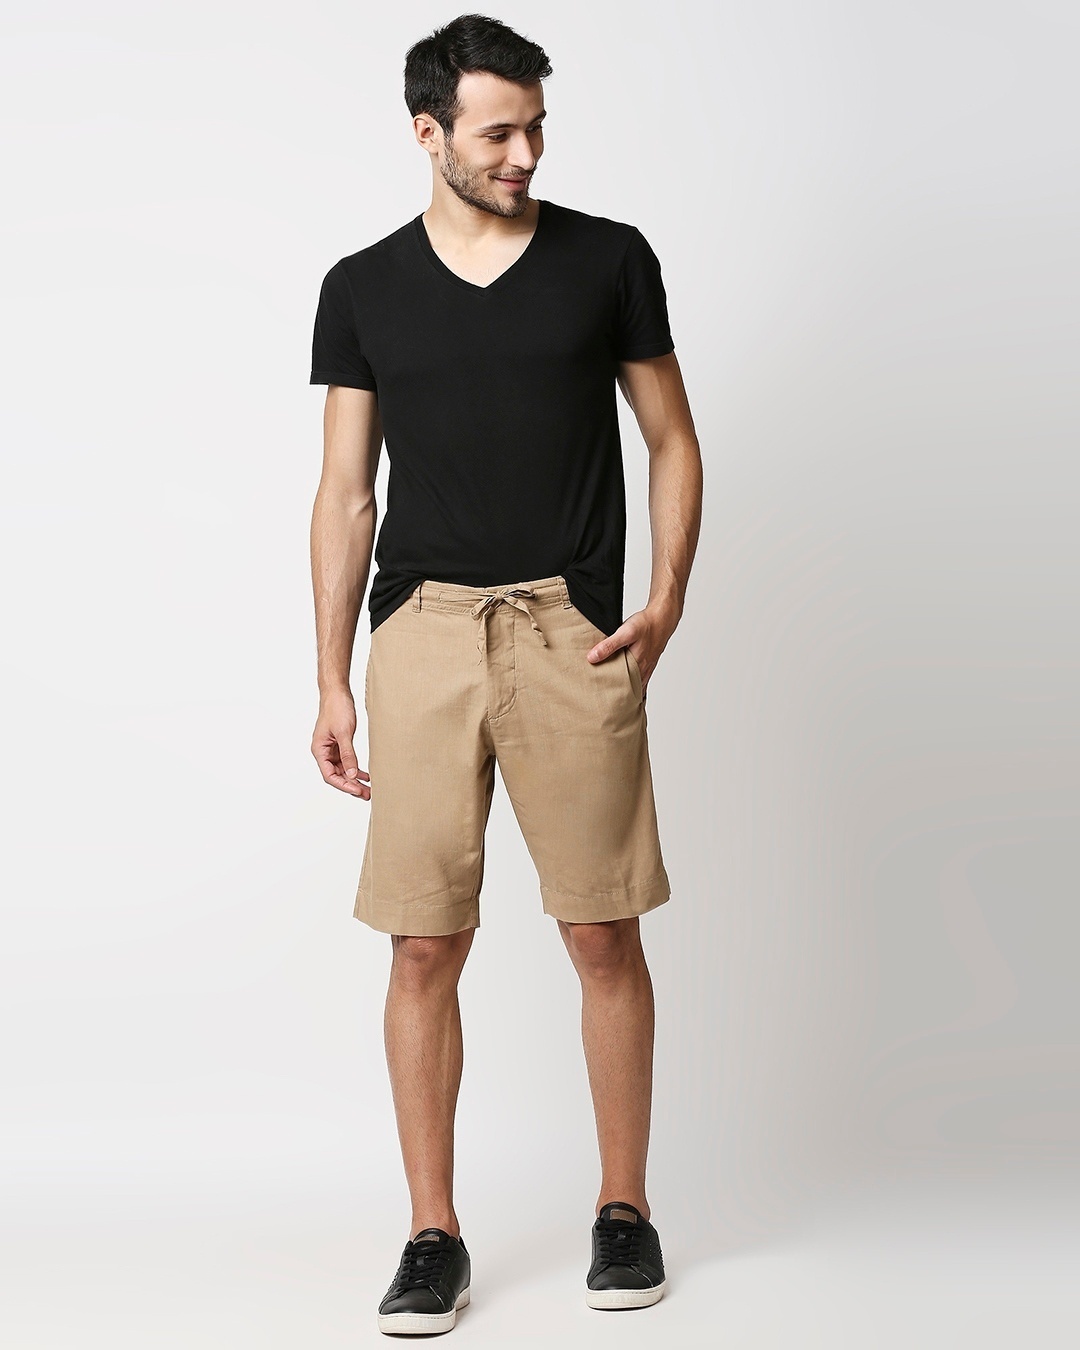 Shop Desert Beige Comfort Shorts